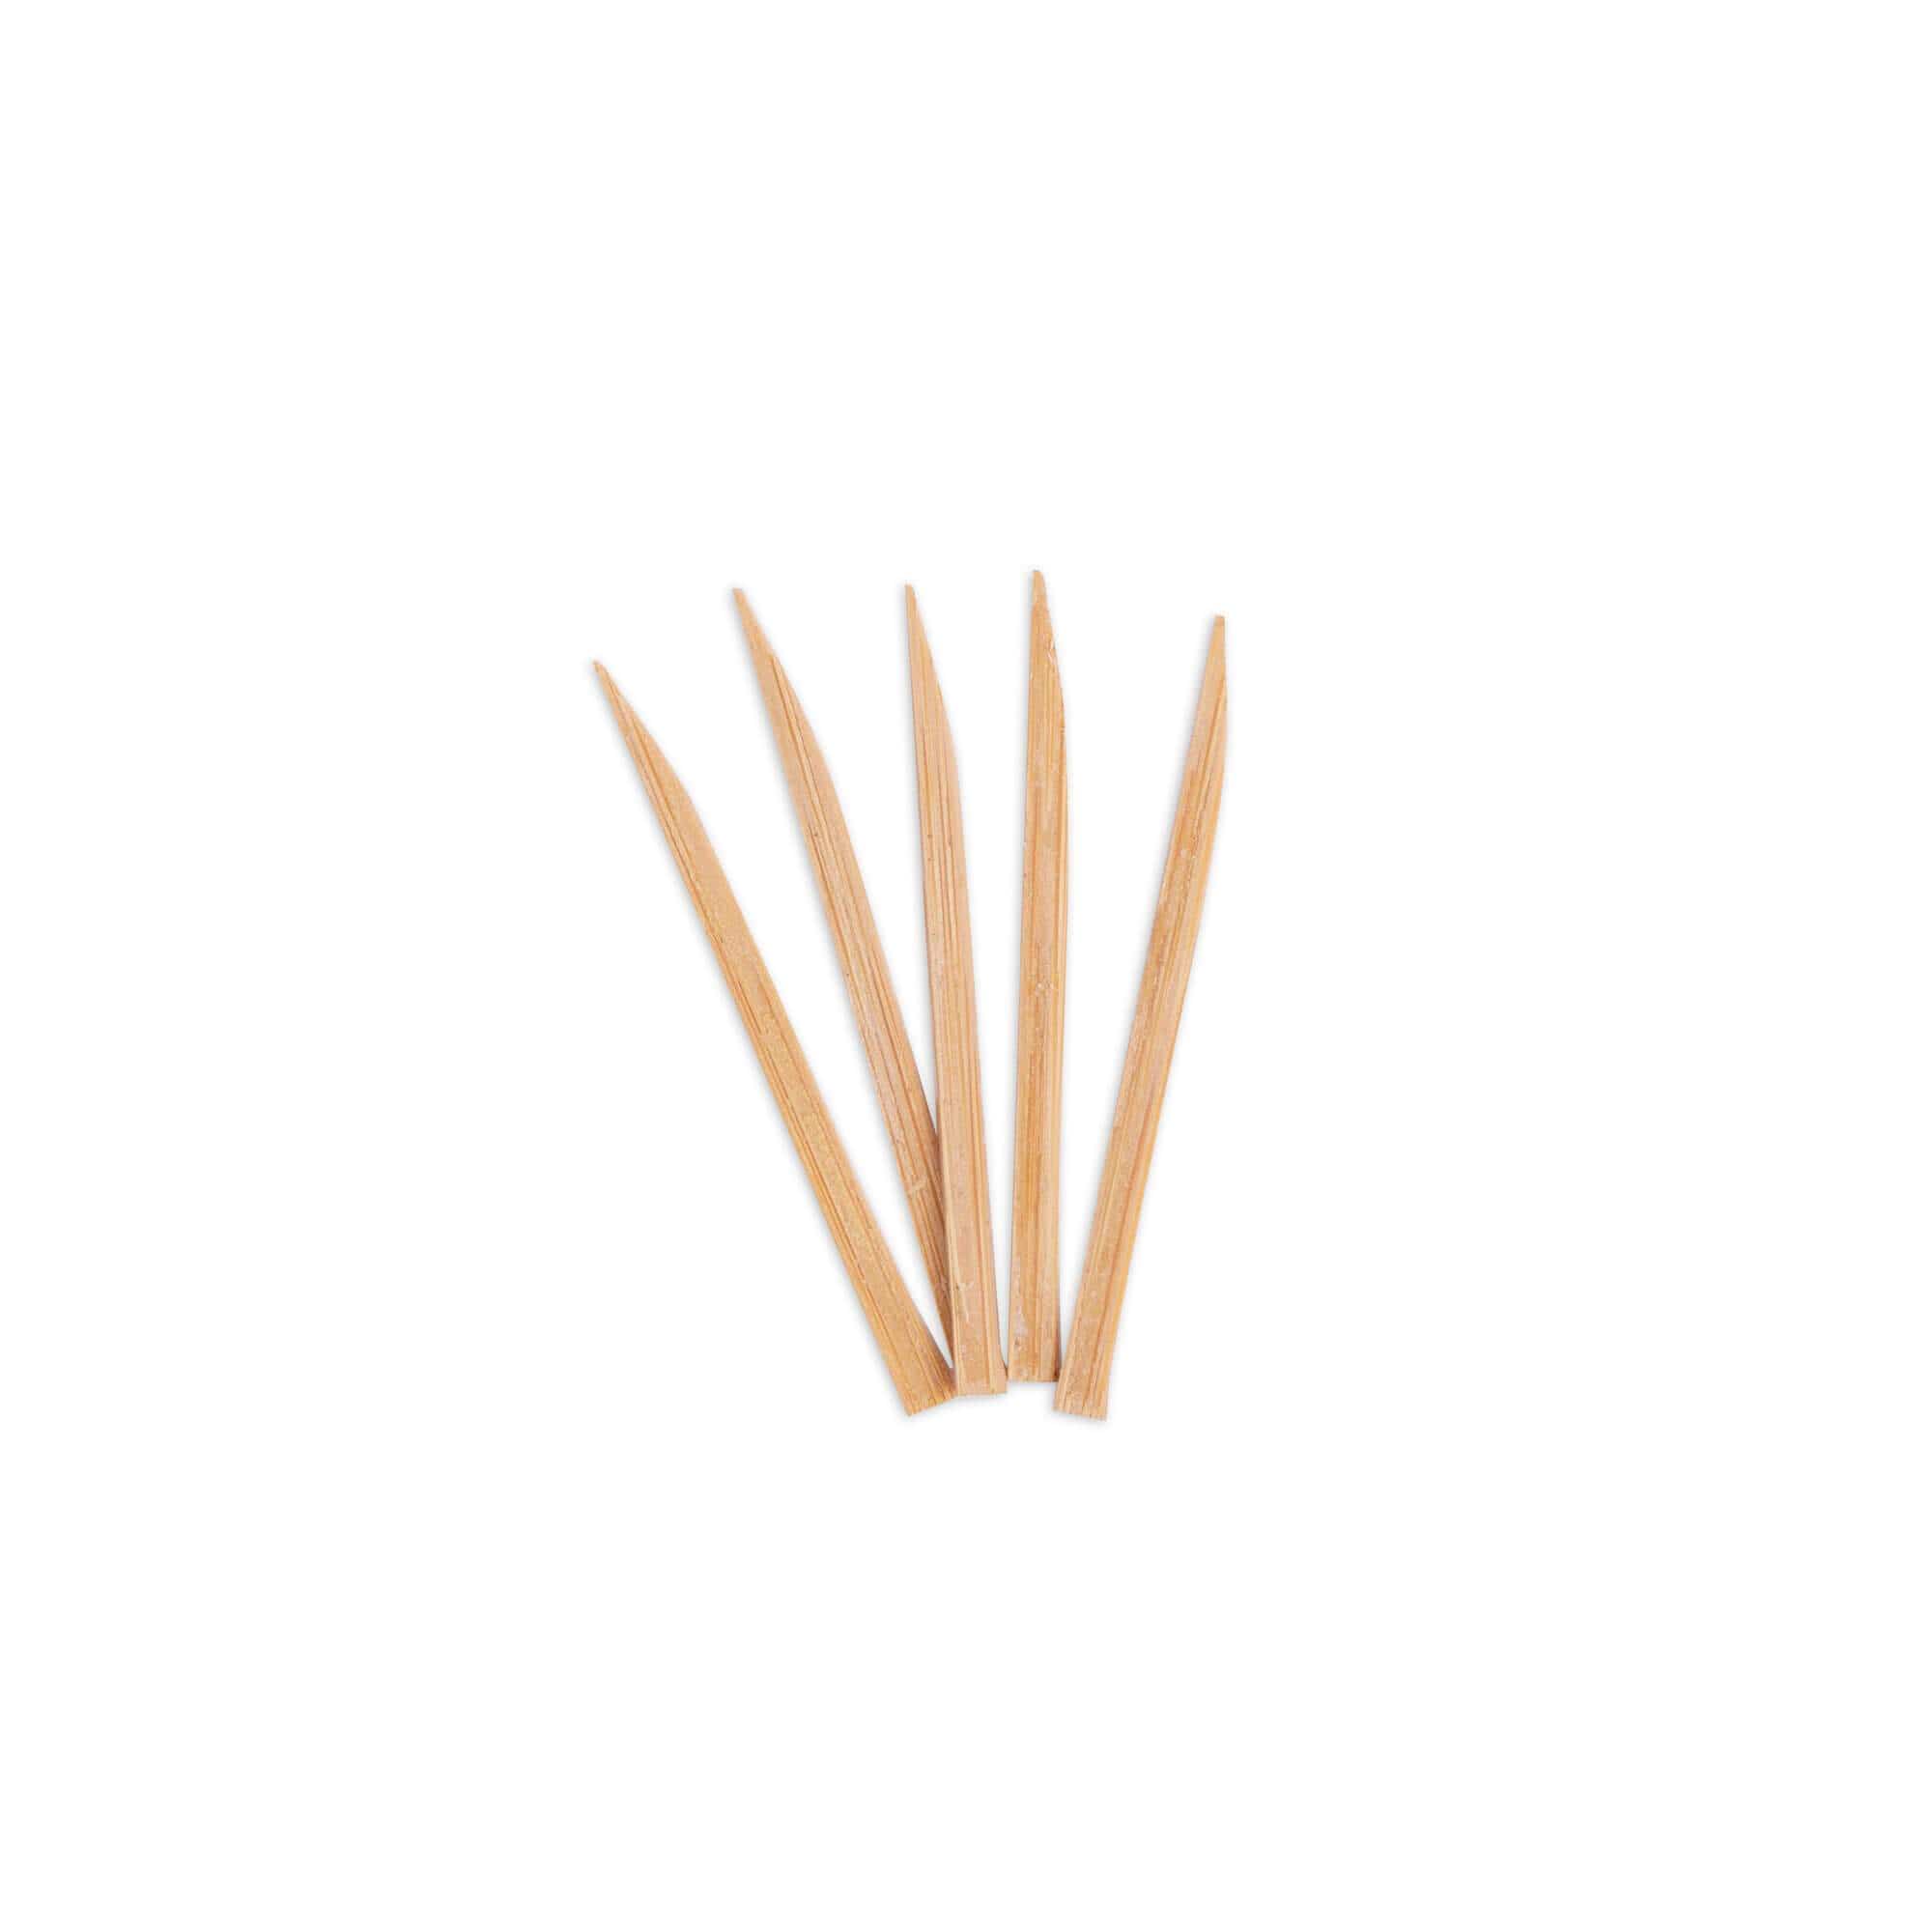 Toothpicks Mint - Fluoride - Plastic Free Amsterdam